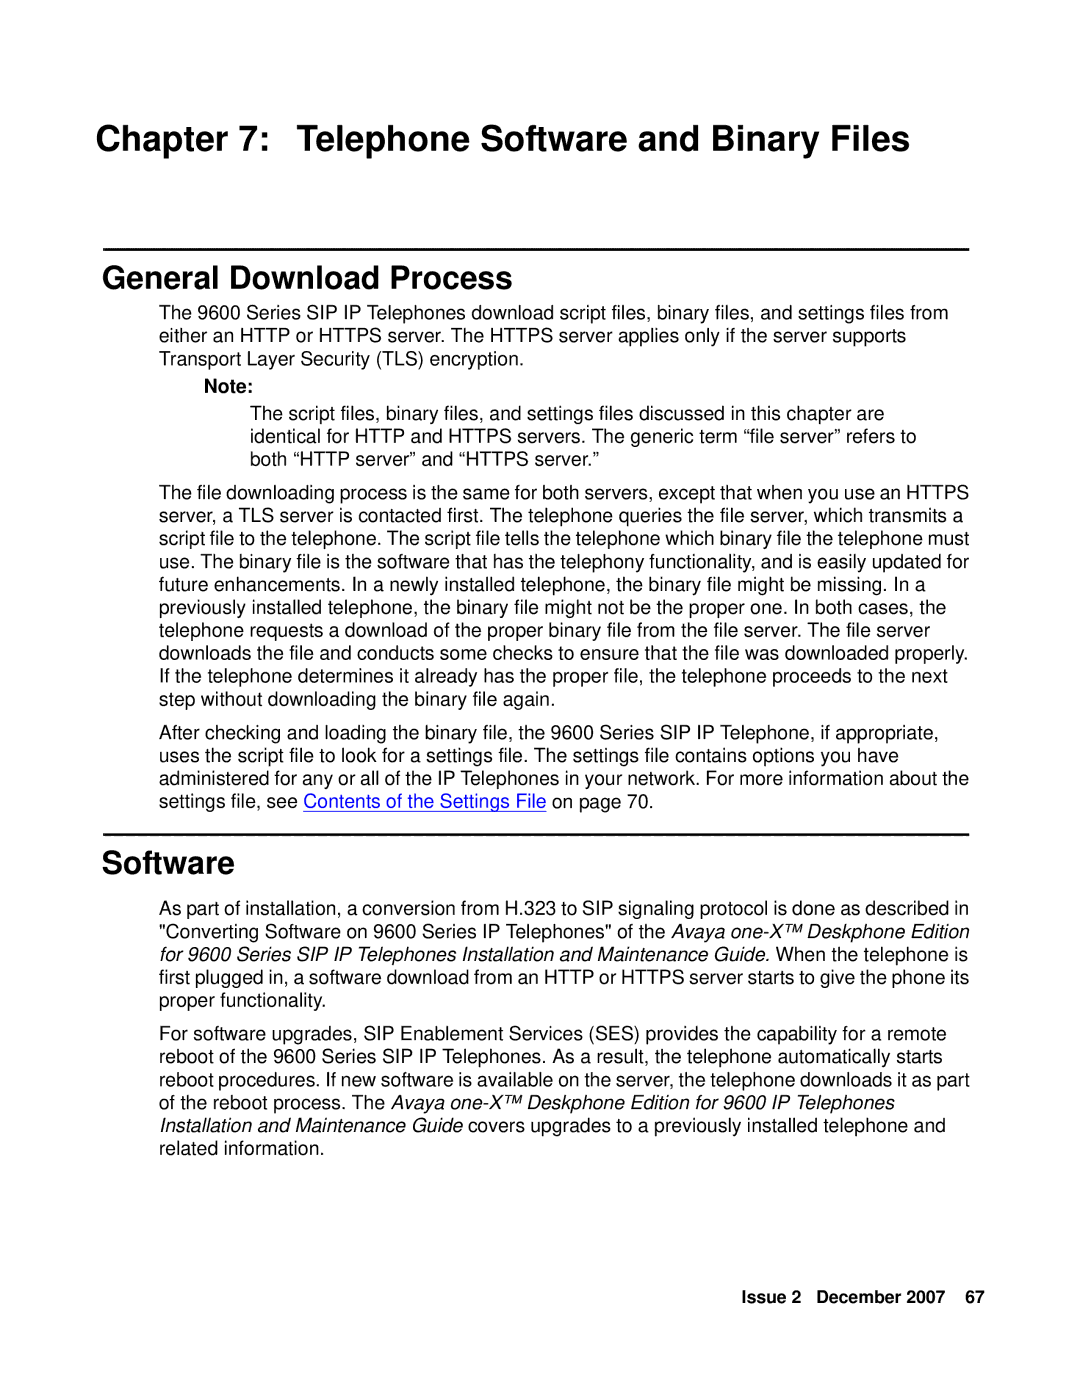 Avaya 9600 manual Telephone Software and Binary Files, General Download Process 